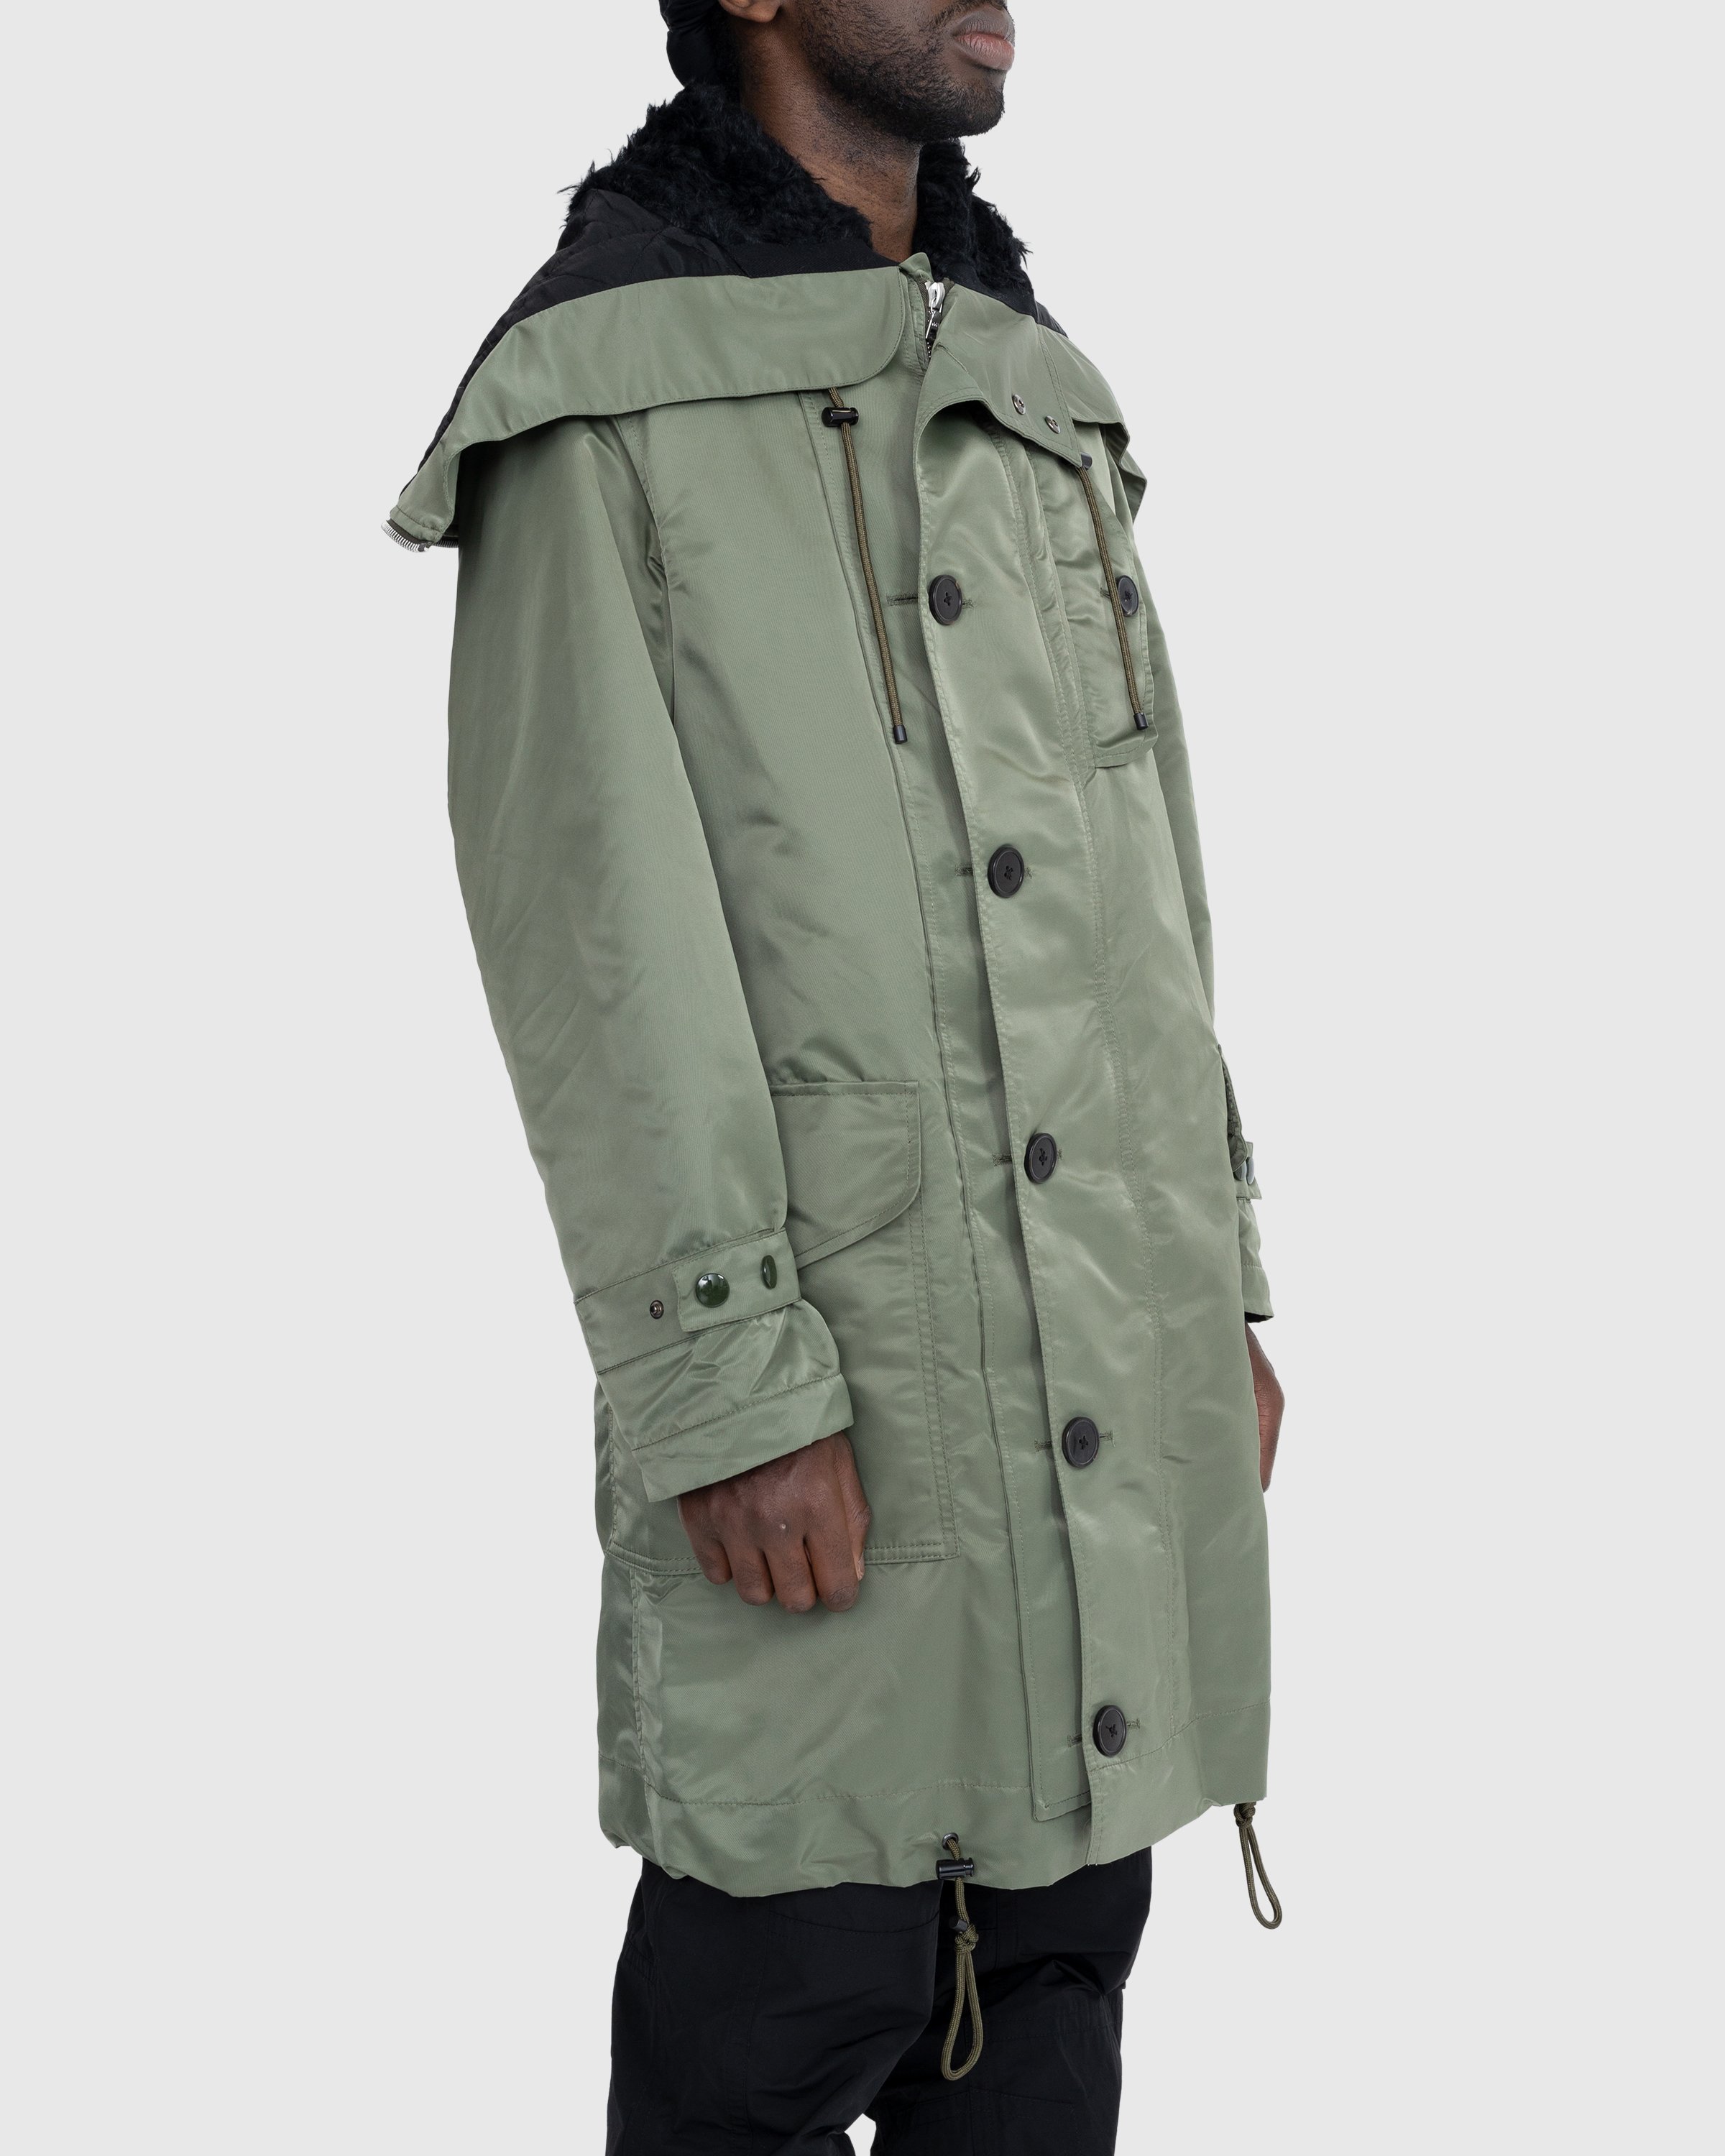 Dries van Noten - Verreli Jacket Khaki - Clothing - Green - Image 3